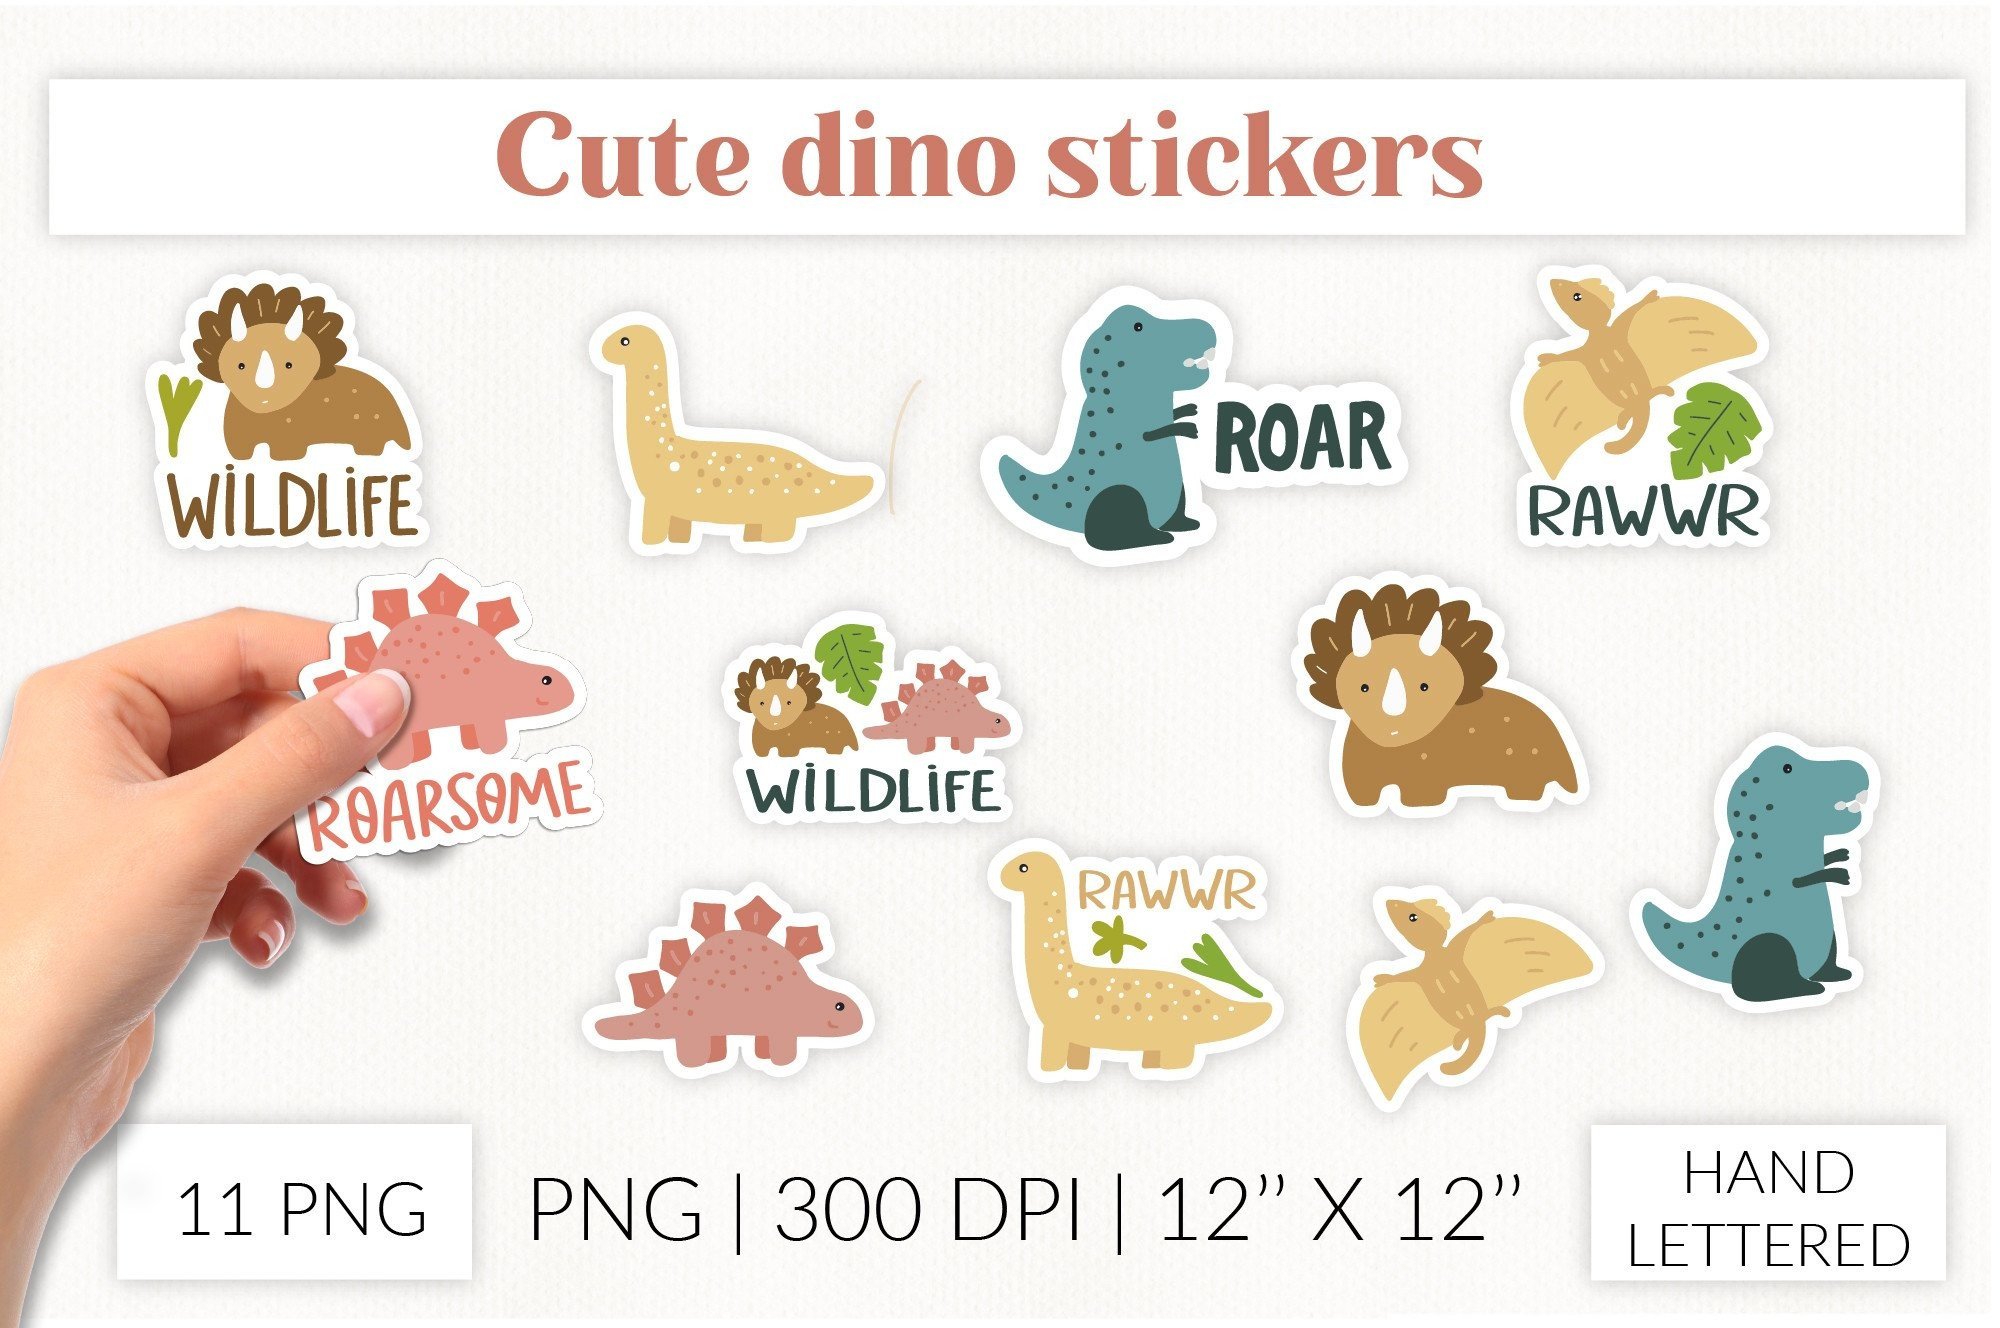 Cute Dino Stickers. Roar Stickers Graphic by StudioSVG · Creative Fabrica